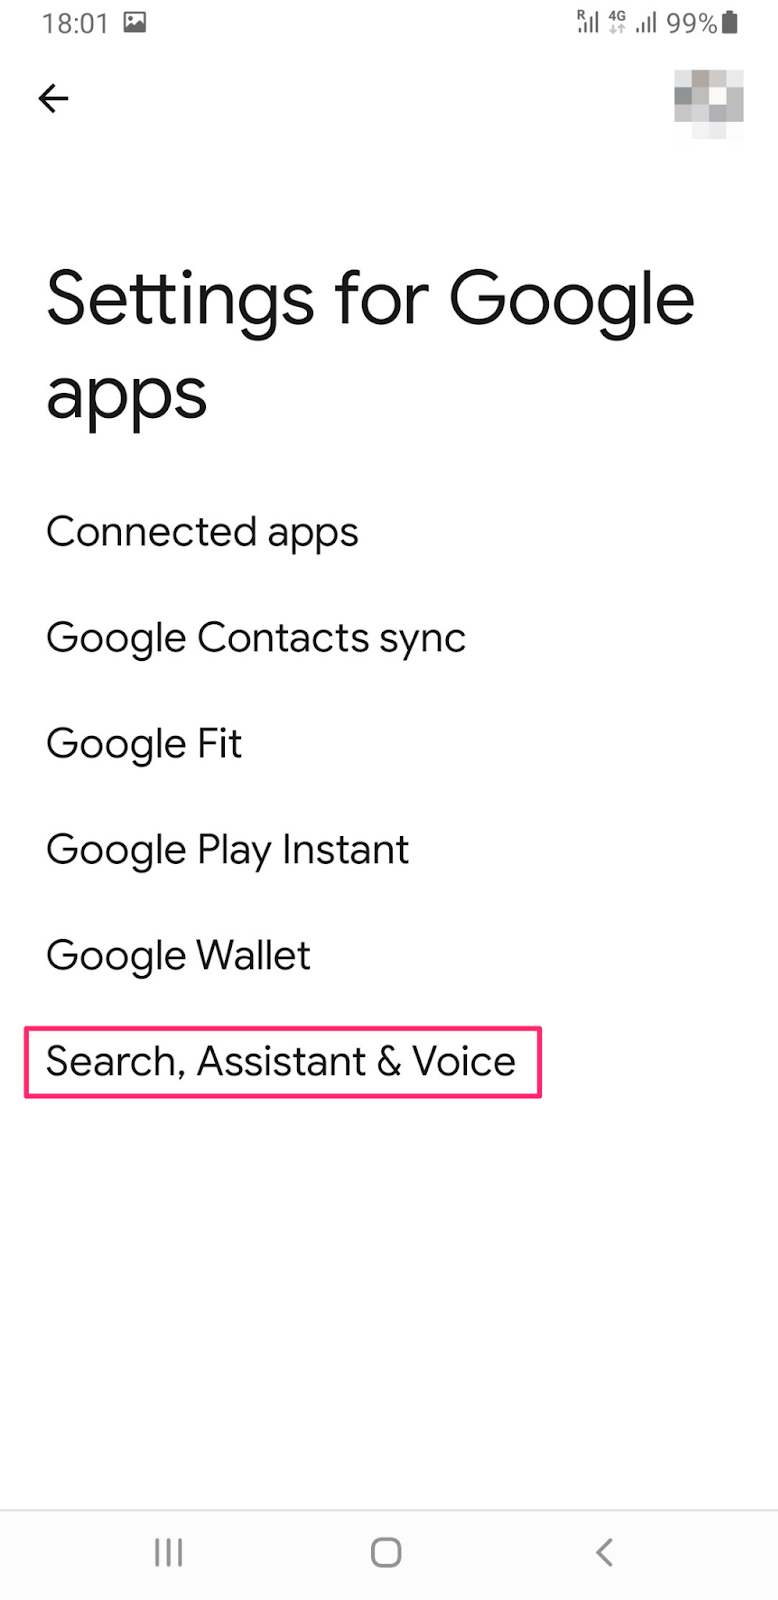 Tap "Search, Assistant & Voice"